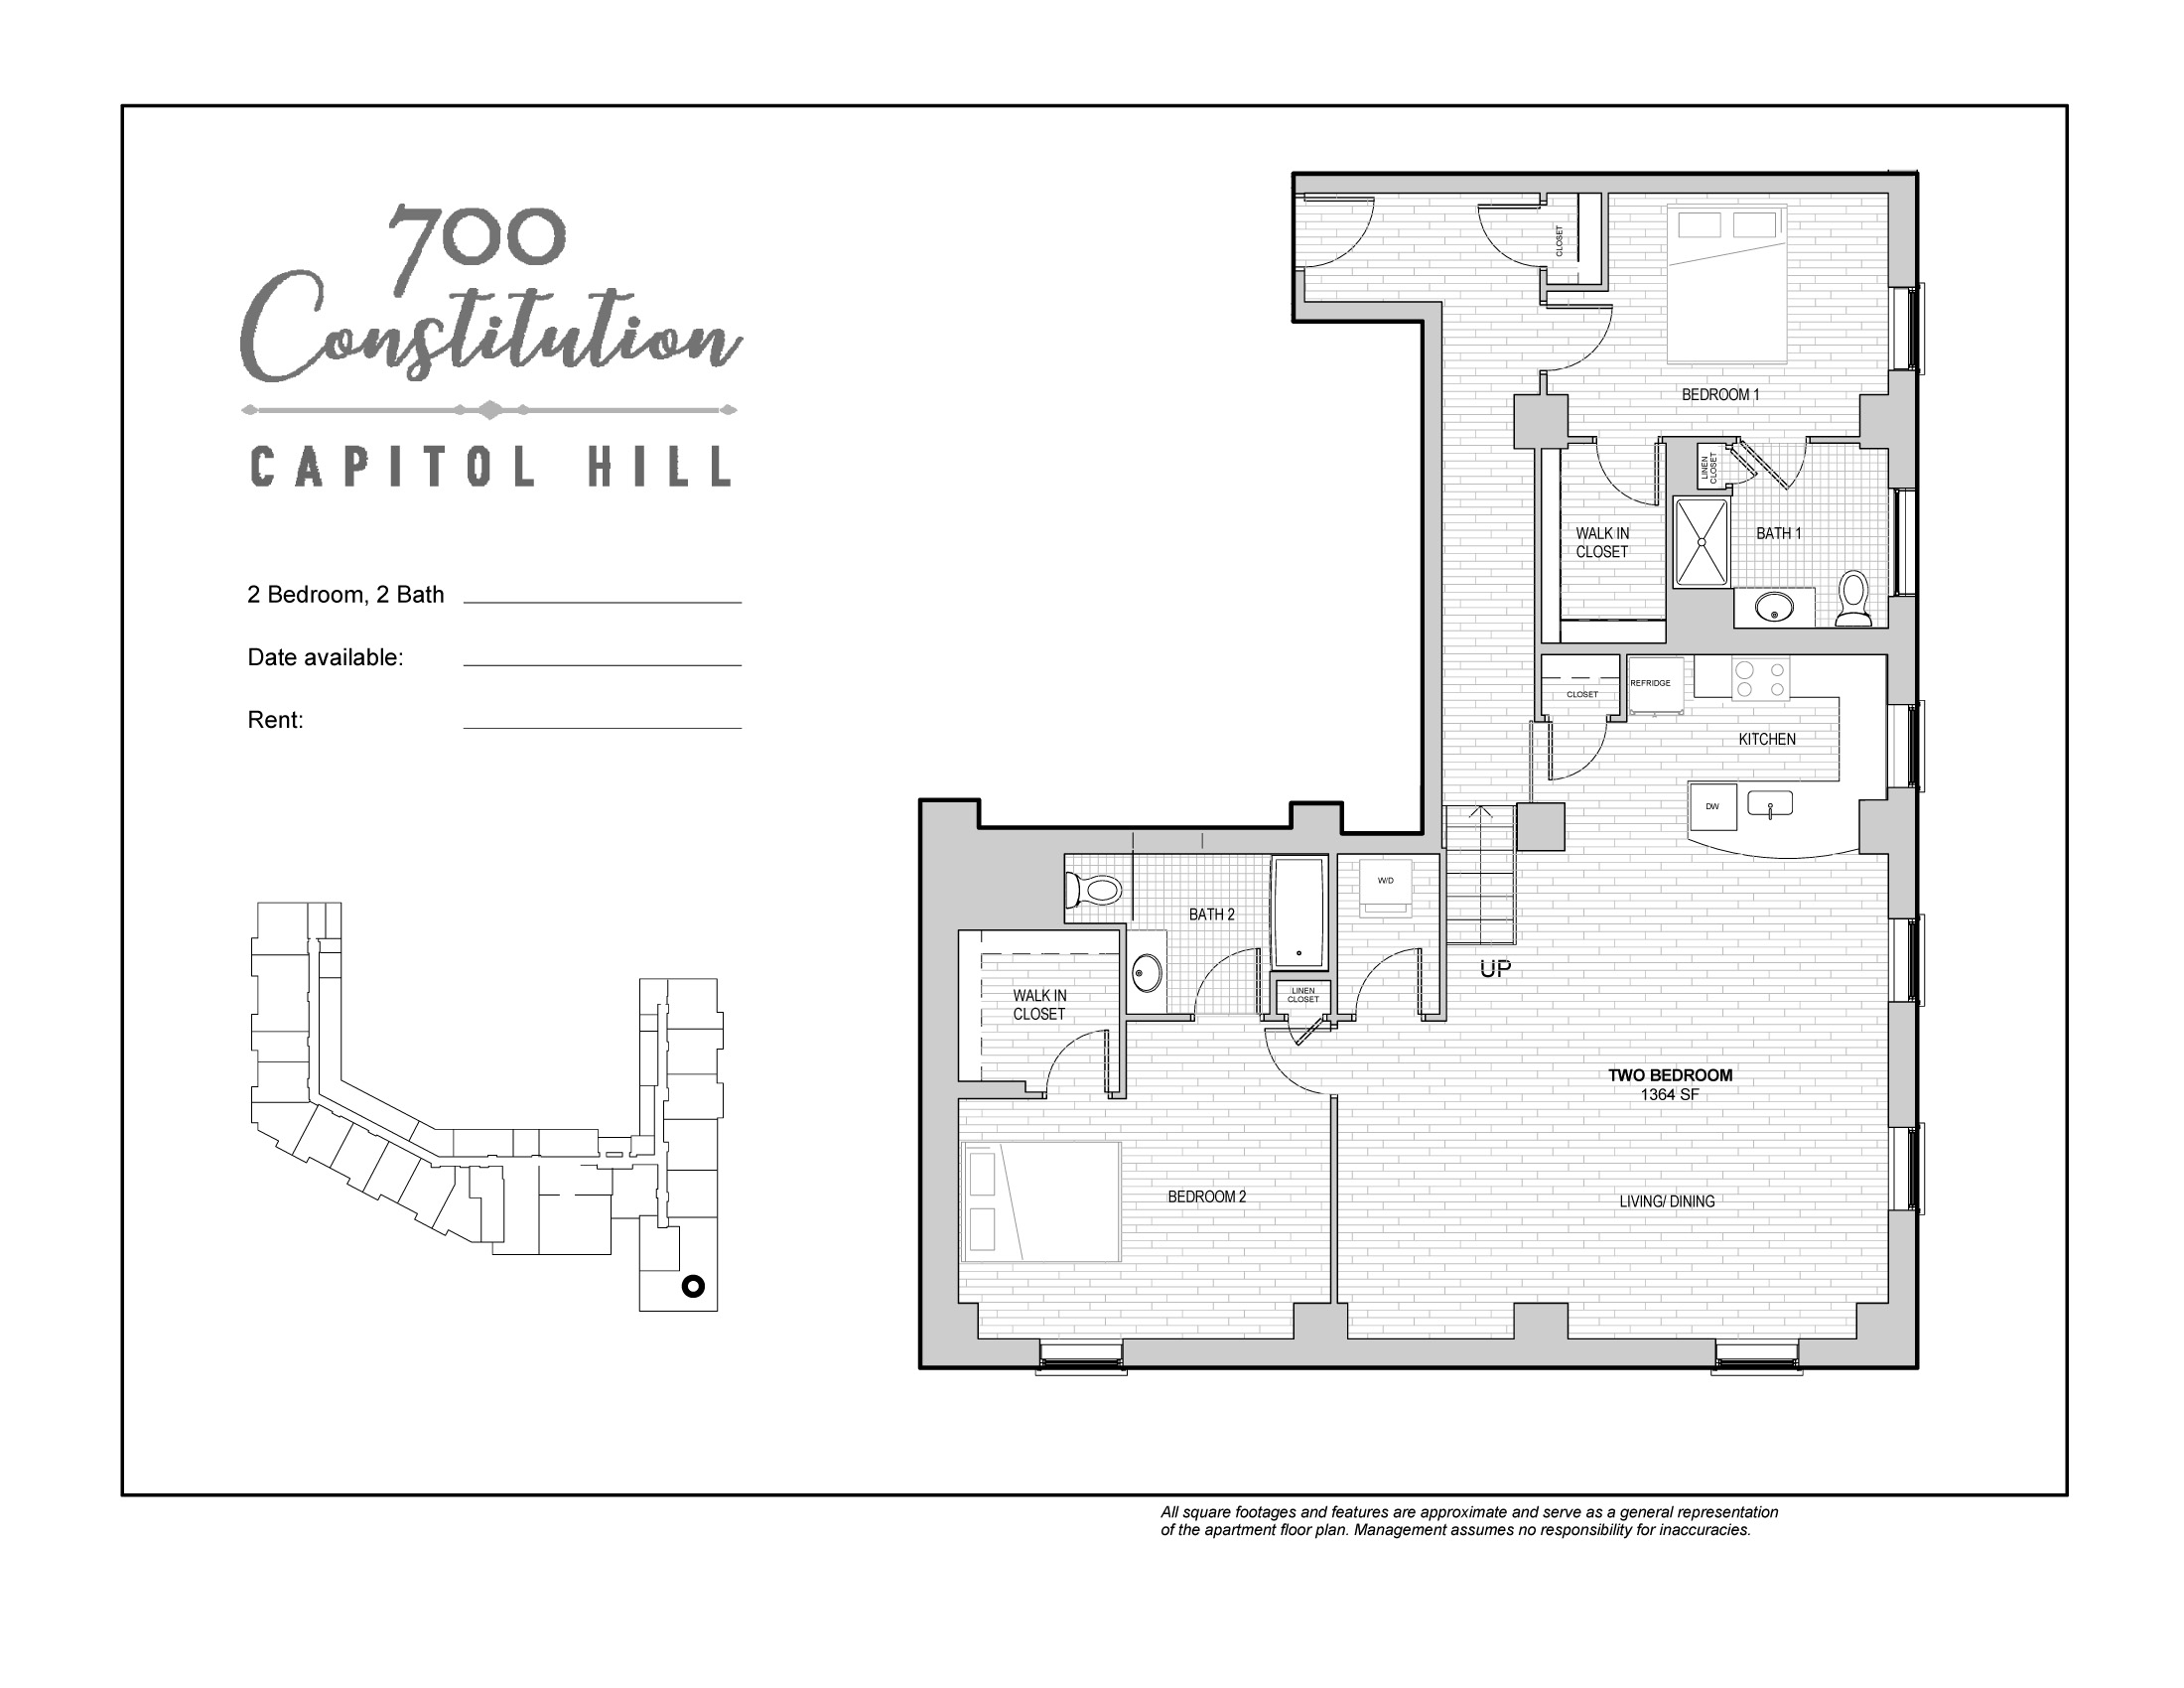 Capitol Hill Apartments Dc 700 Constitution Apartments